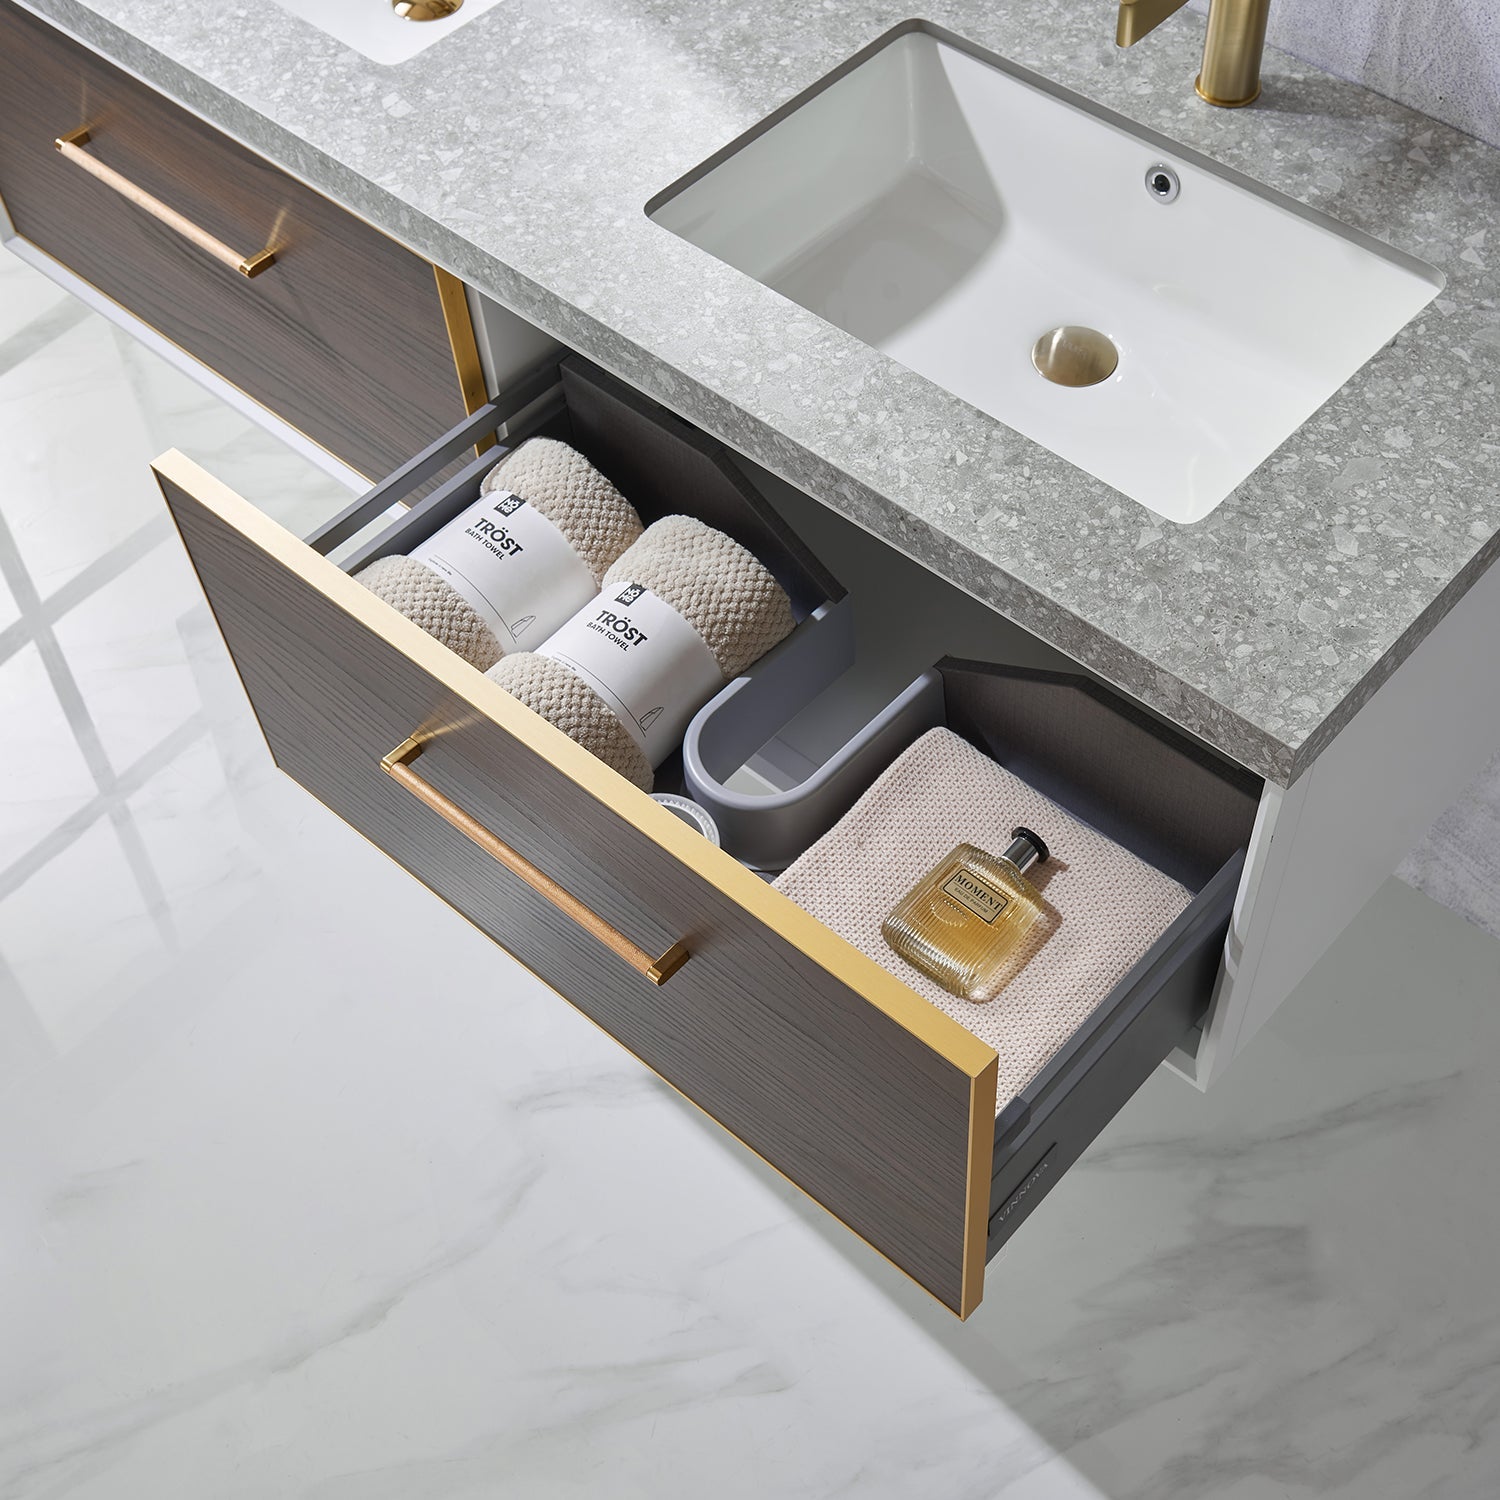 Vinnova Design Caparroso 60" Double Sink Bath Vanity in Dark Walnut with Grey Sintered Stone Top - New Star Living